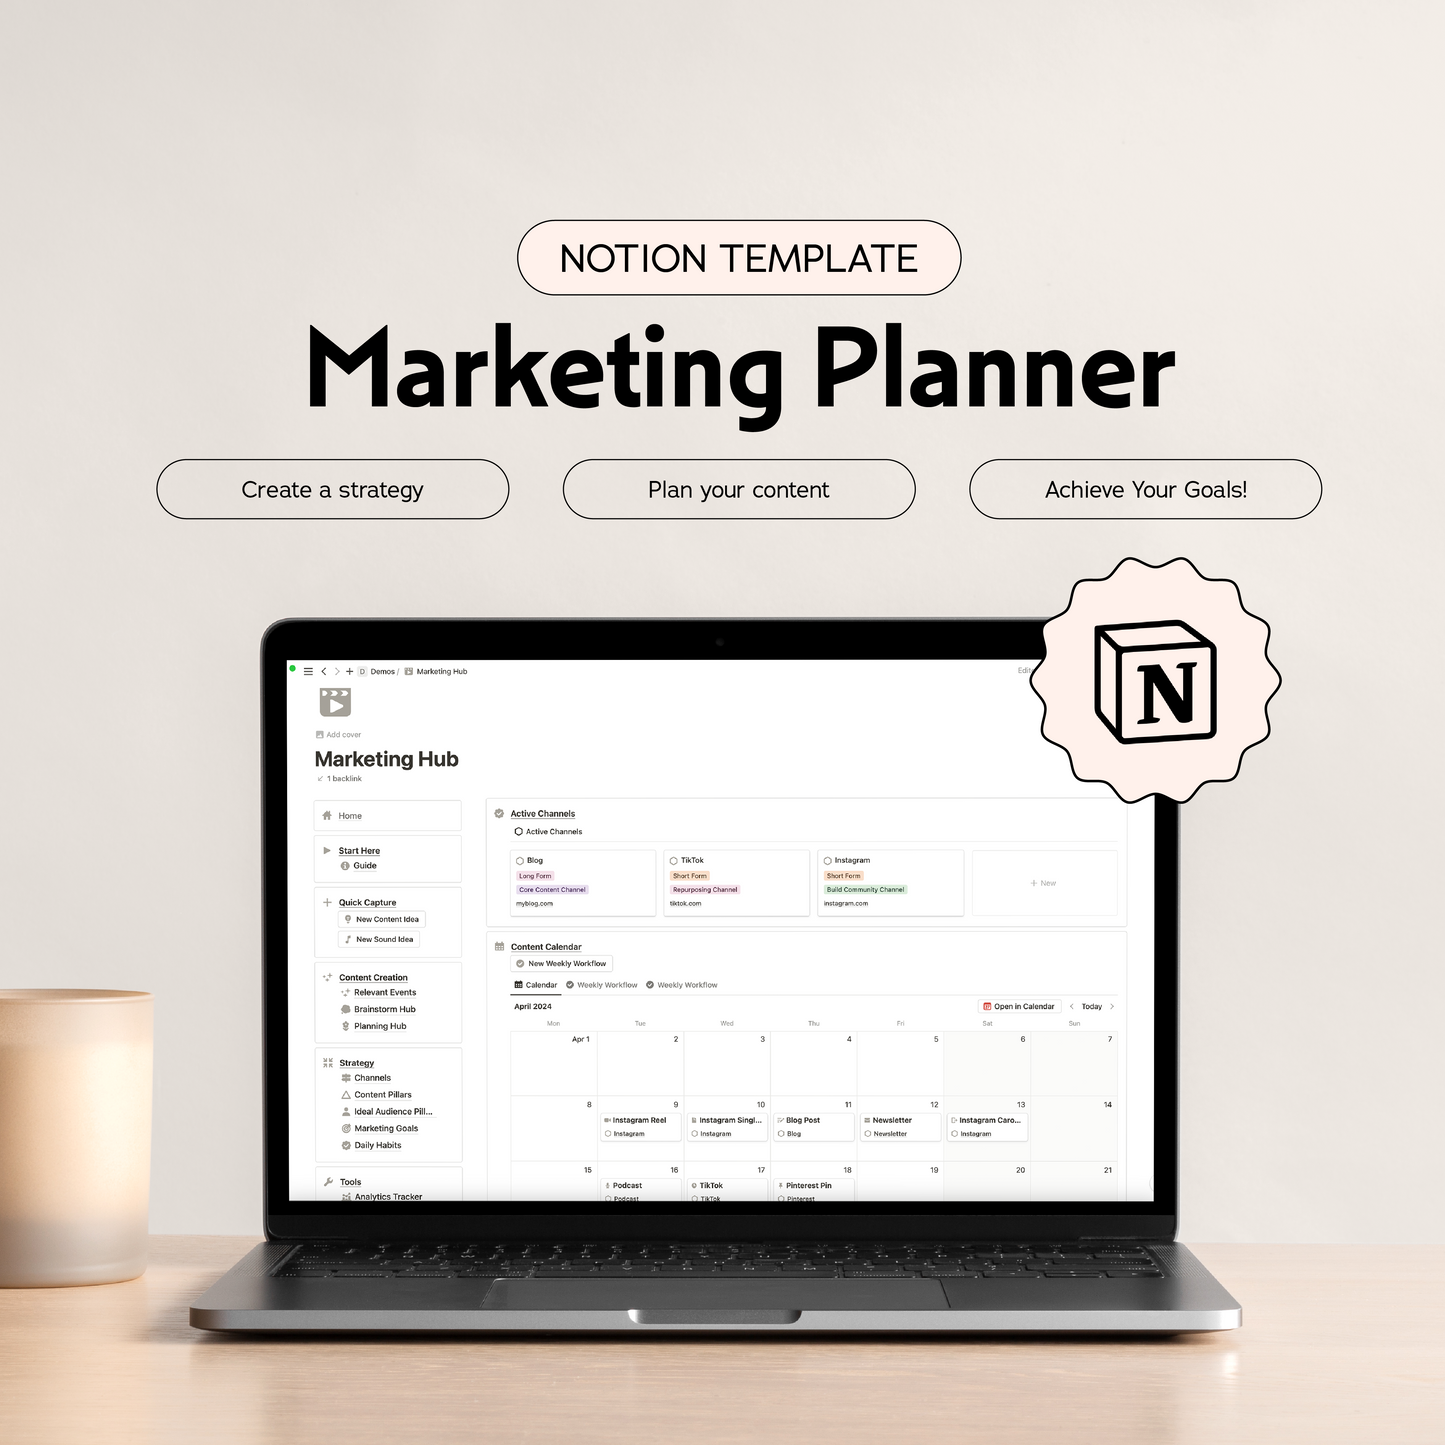 Marketing Planner Notion Template